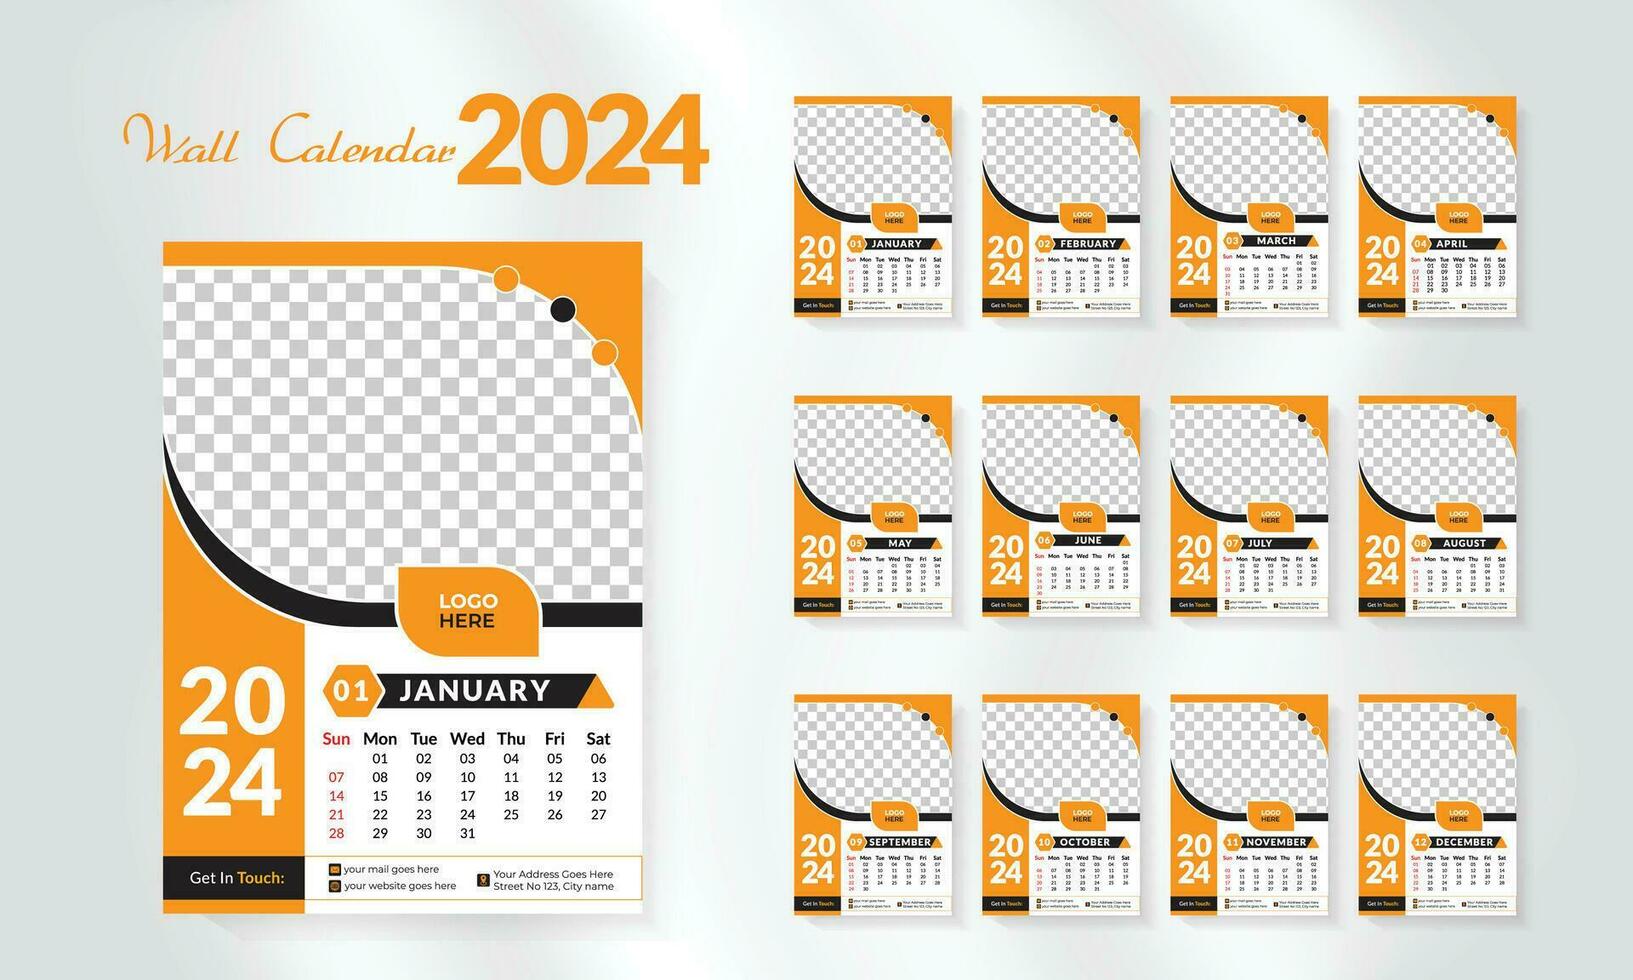 2024 happy new year calendar template set. modern and creative layout wall calendar set of 12 month template. minimalist template or calender a4 layout design.  week start on sunday. vector